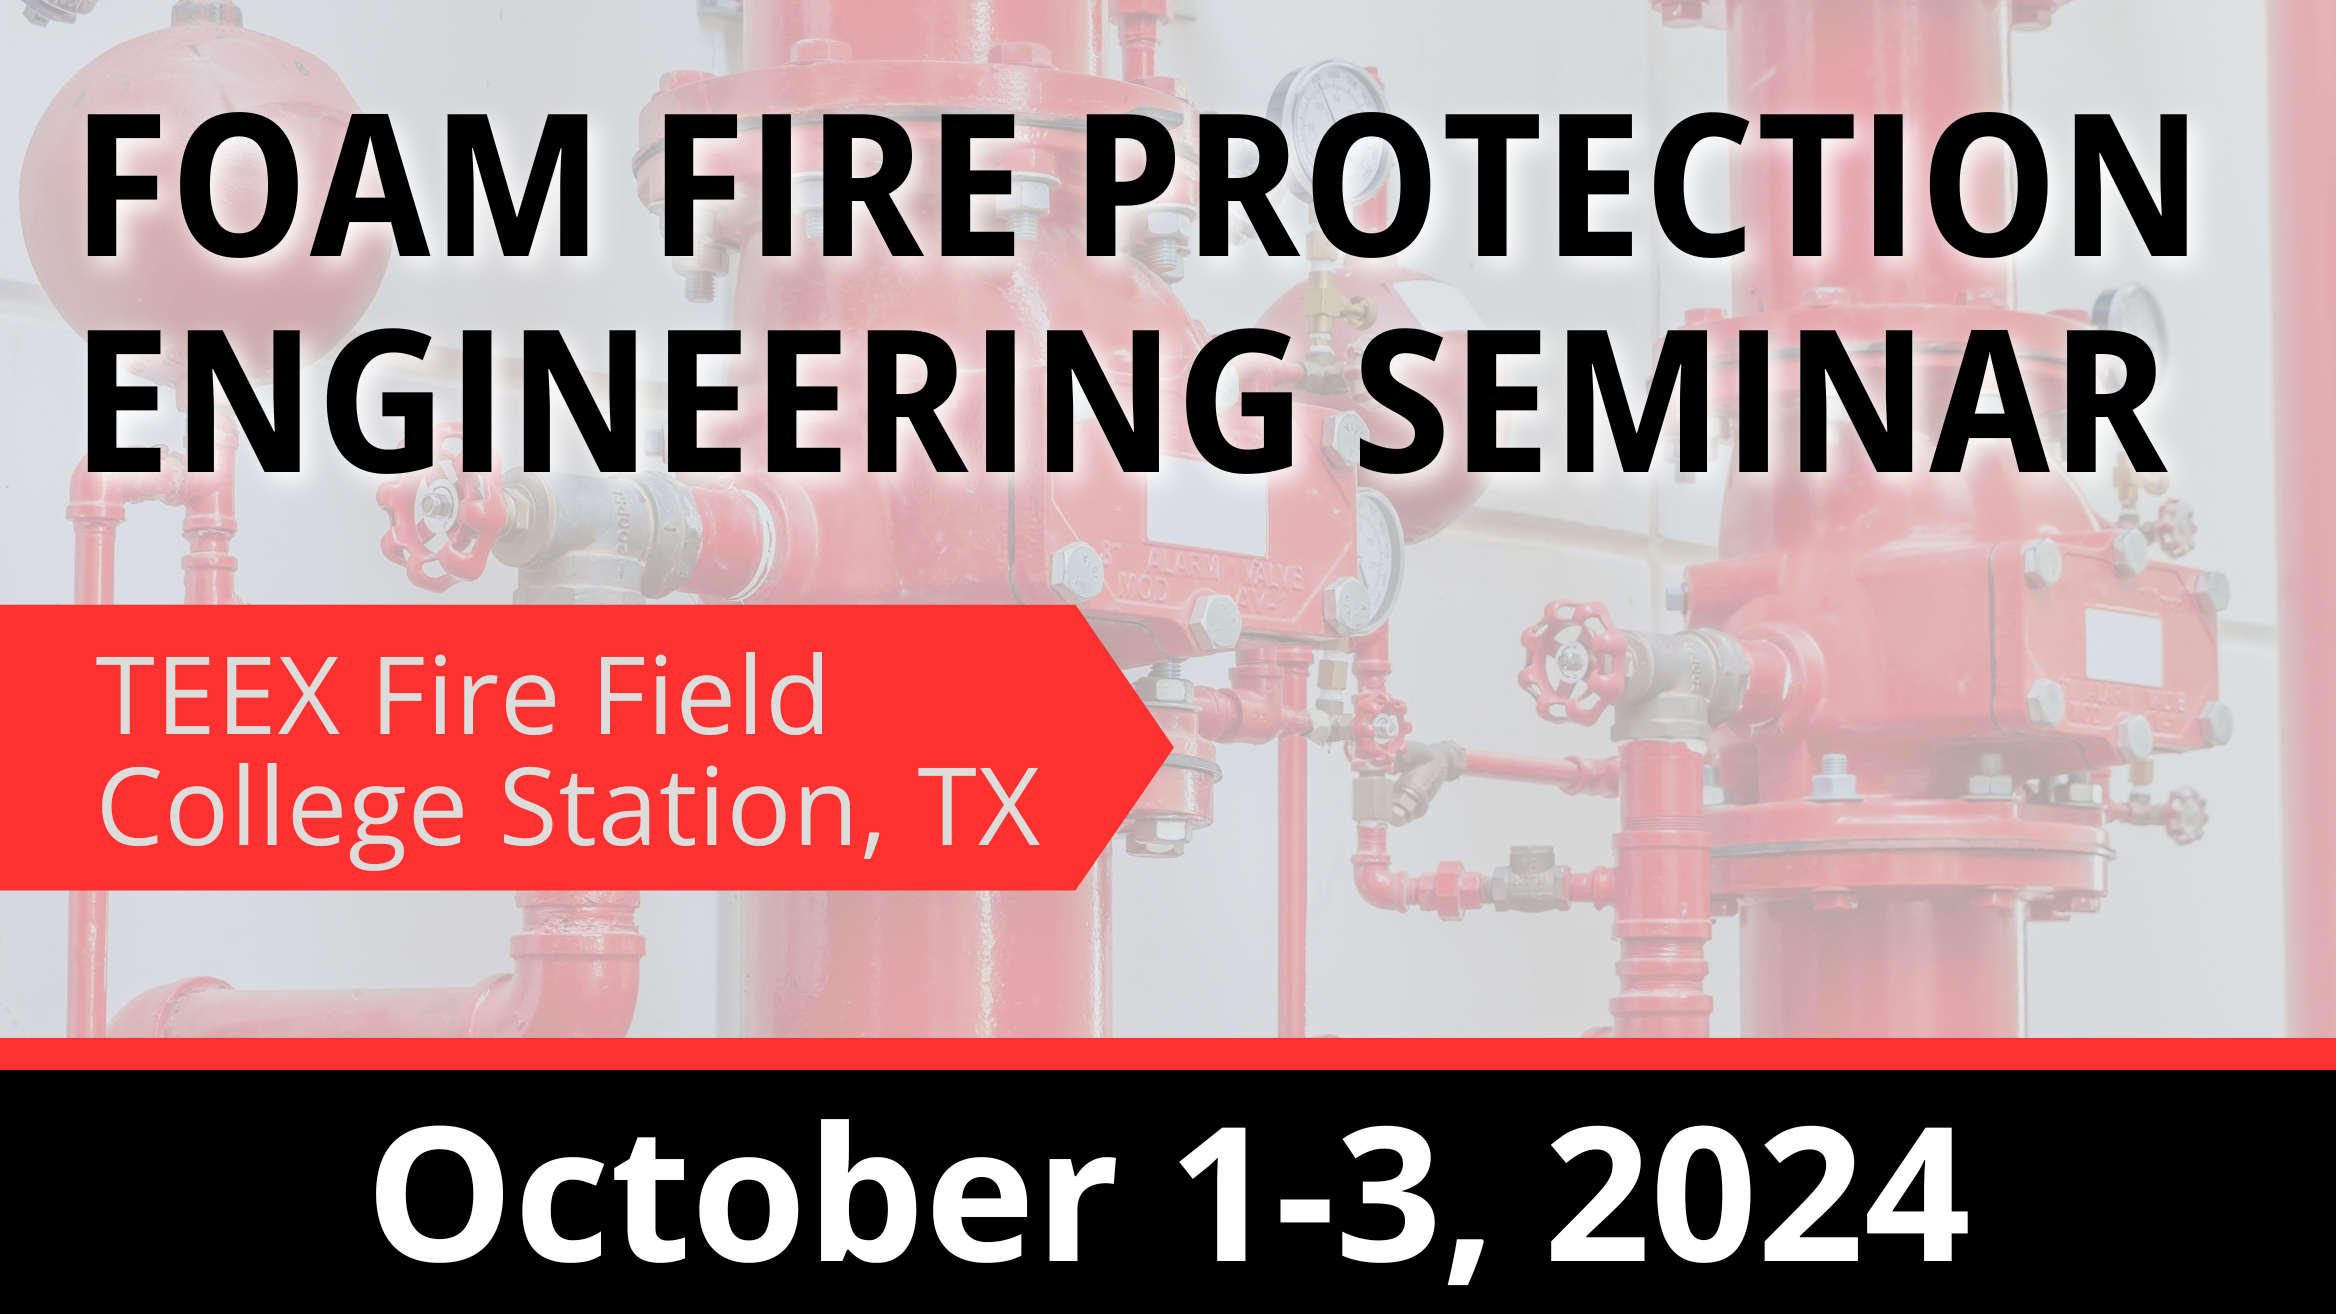 Foam Fire Protection Engineering Seminar